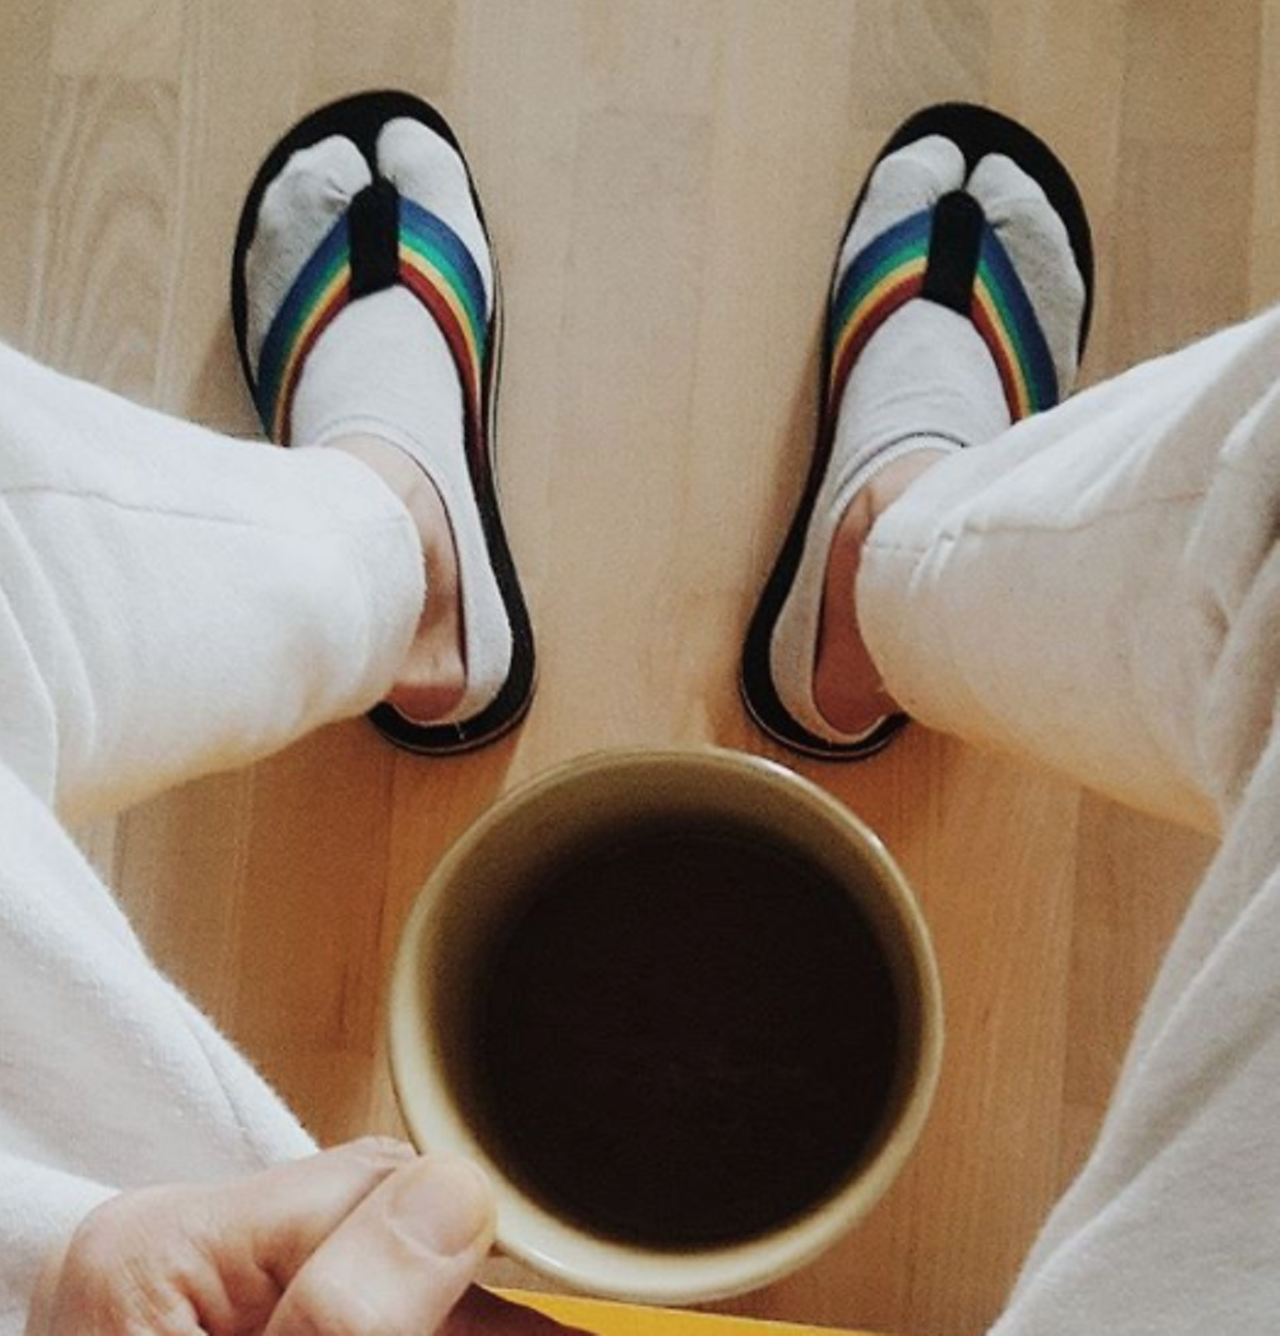 Socks and sandals start to appear together
Photo via damirakalajzic/Instagram